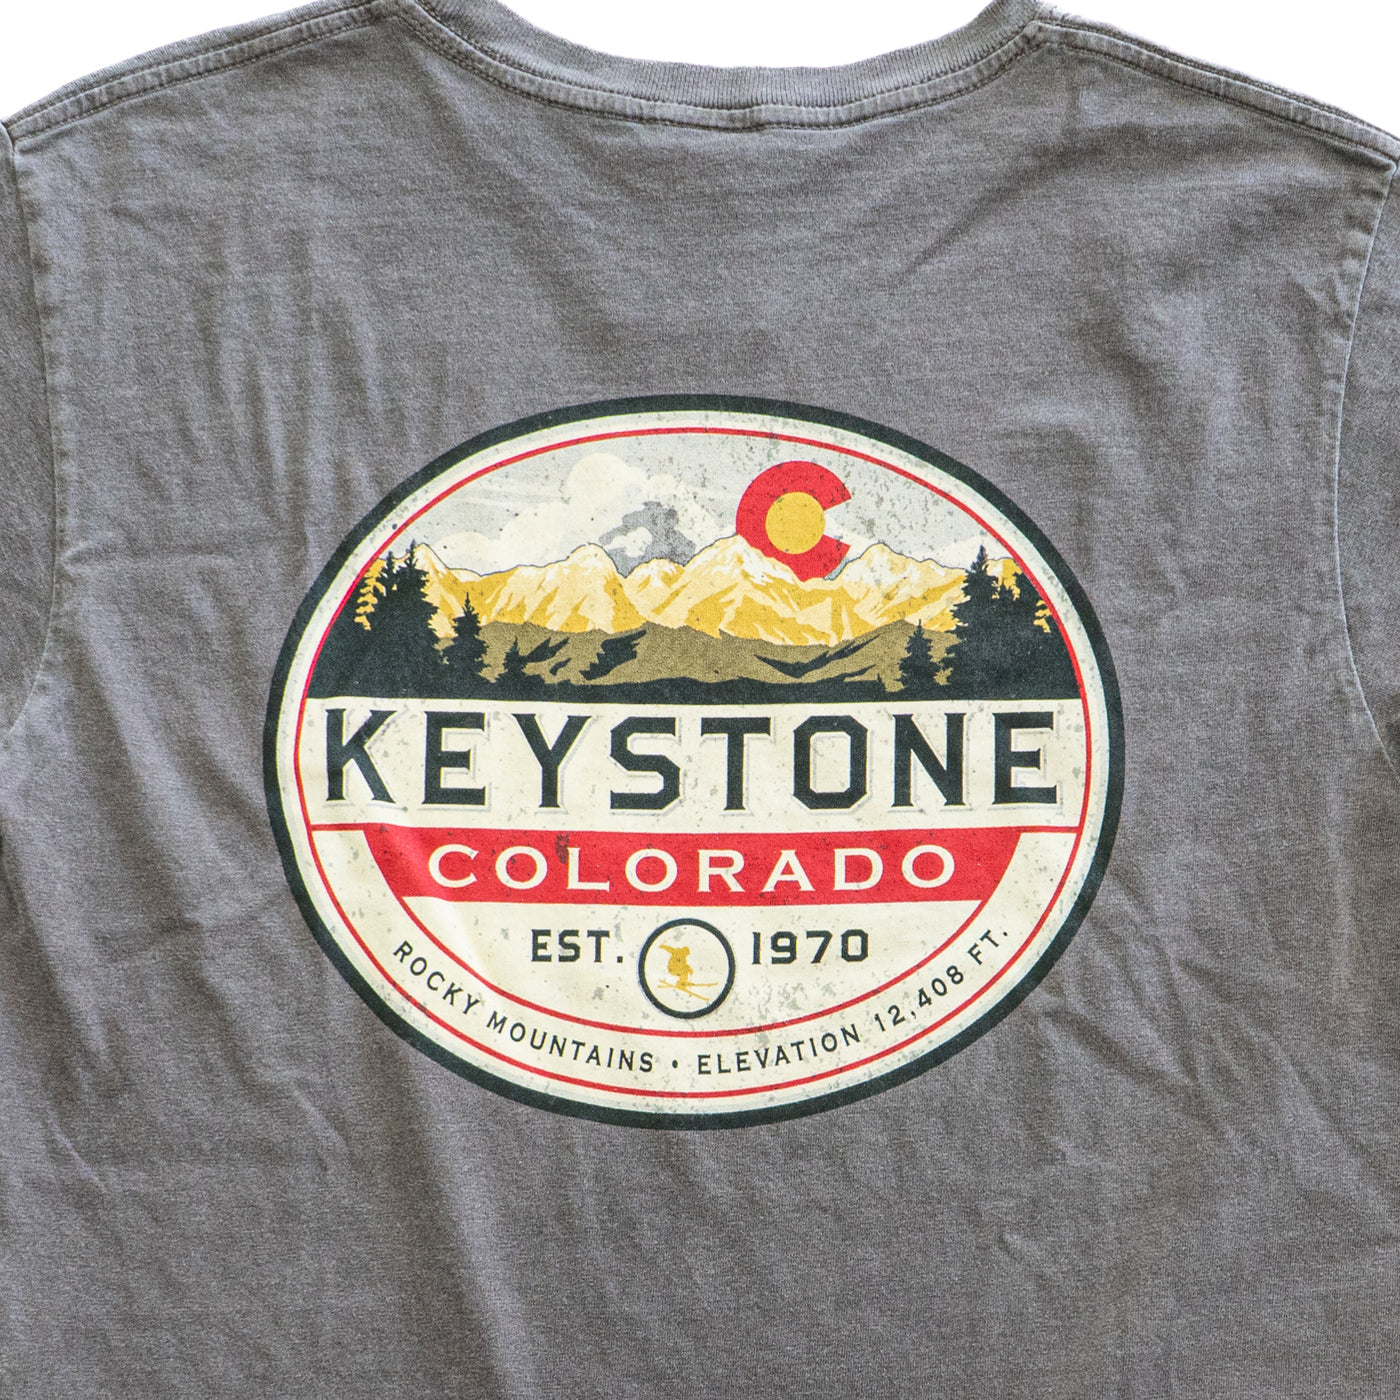 Circle Keystone Shirt